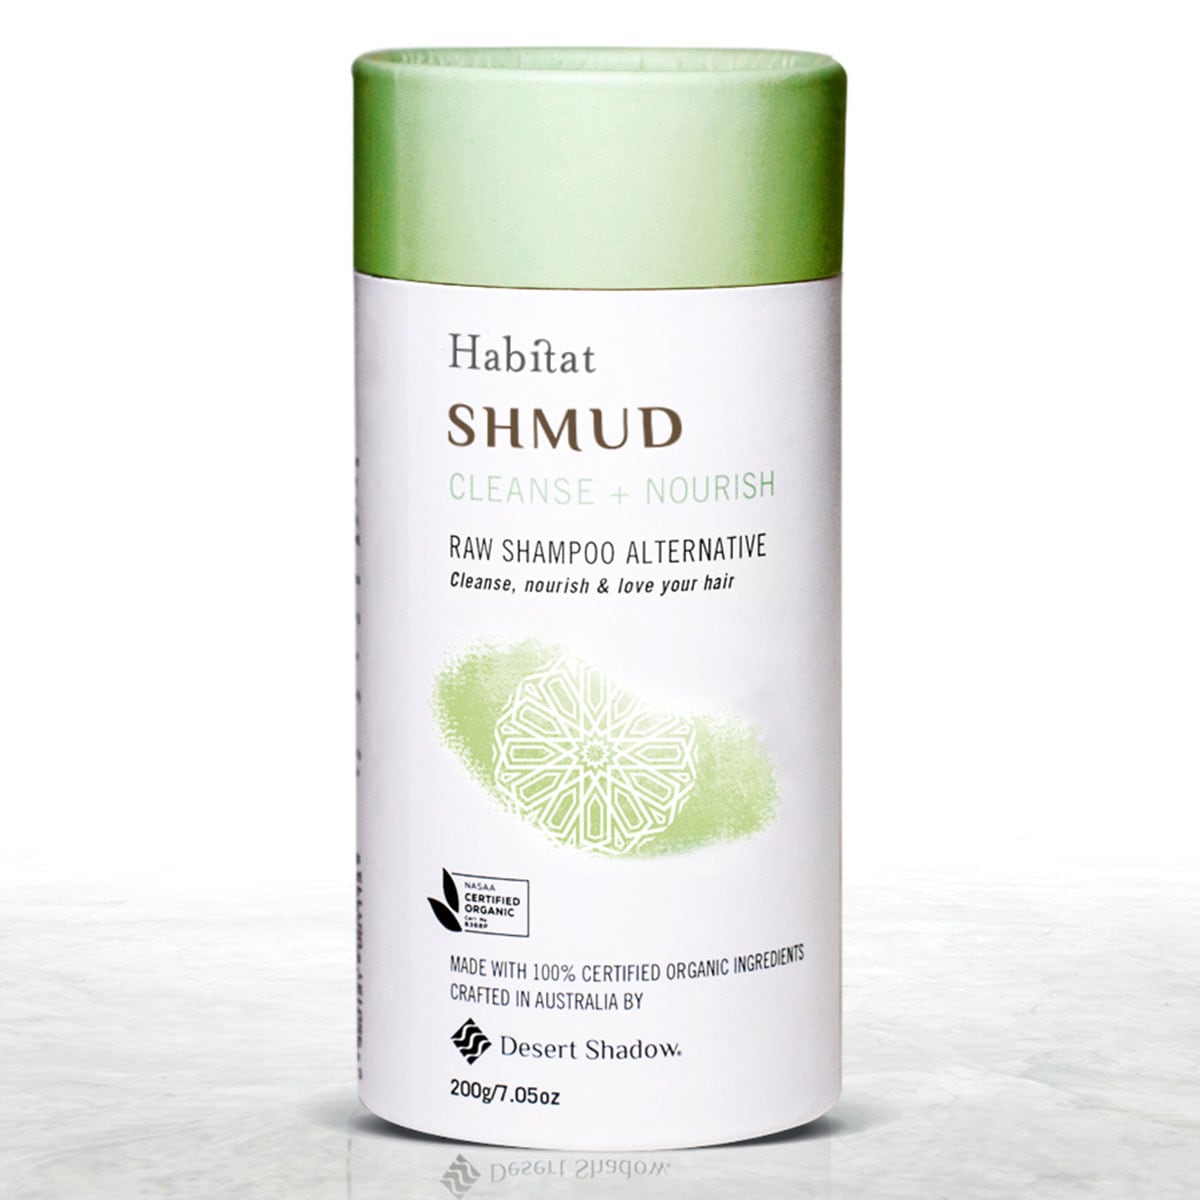 Desert Shadow Shmud Raw Shampoo Cleanse & Nourish 200g